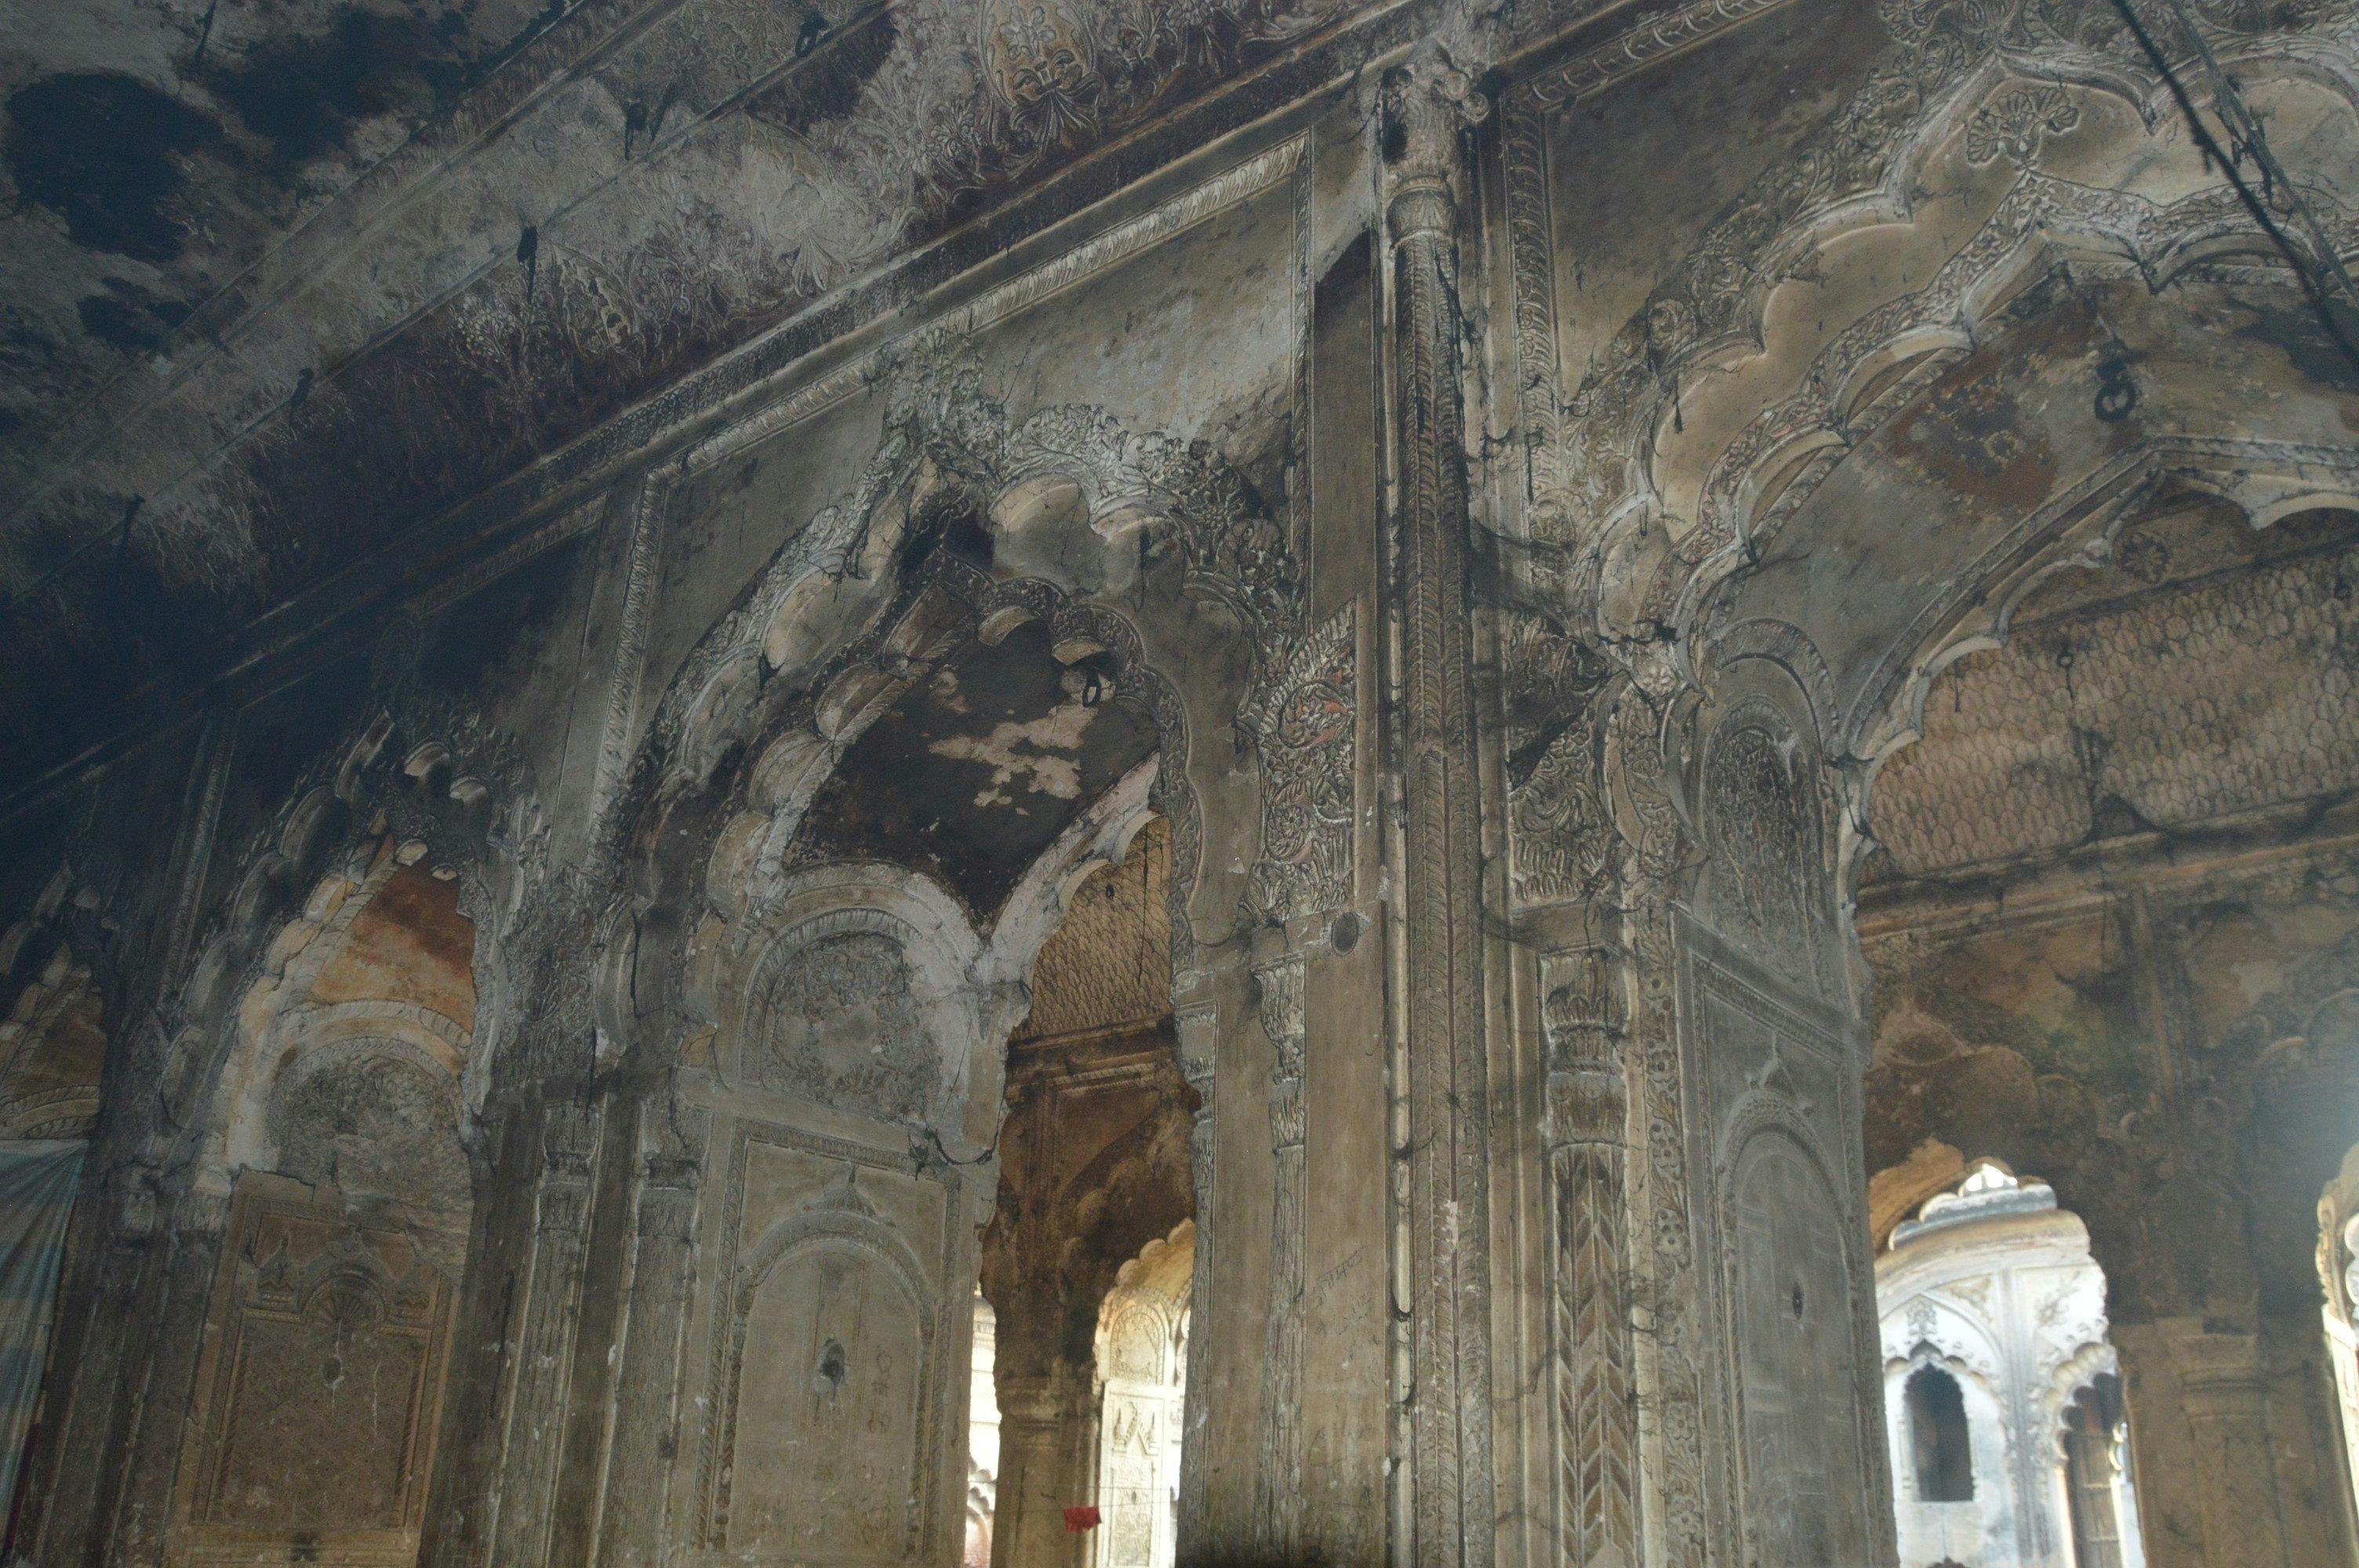 Inside the main hall of the imambara